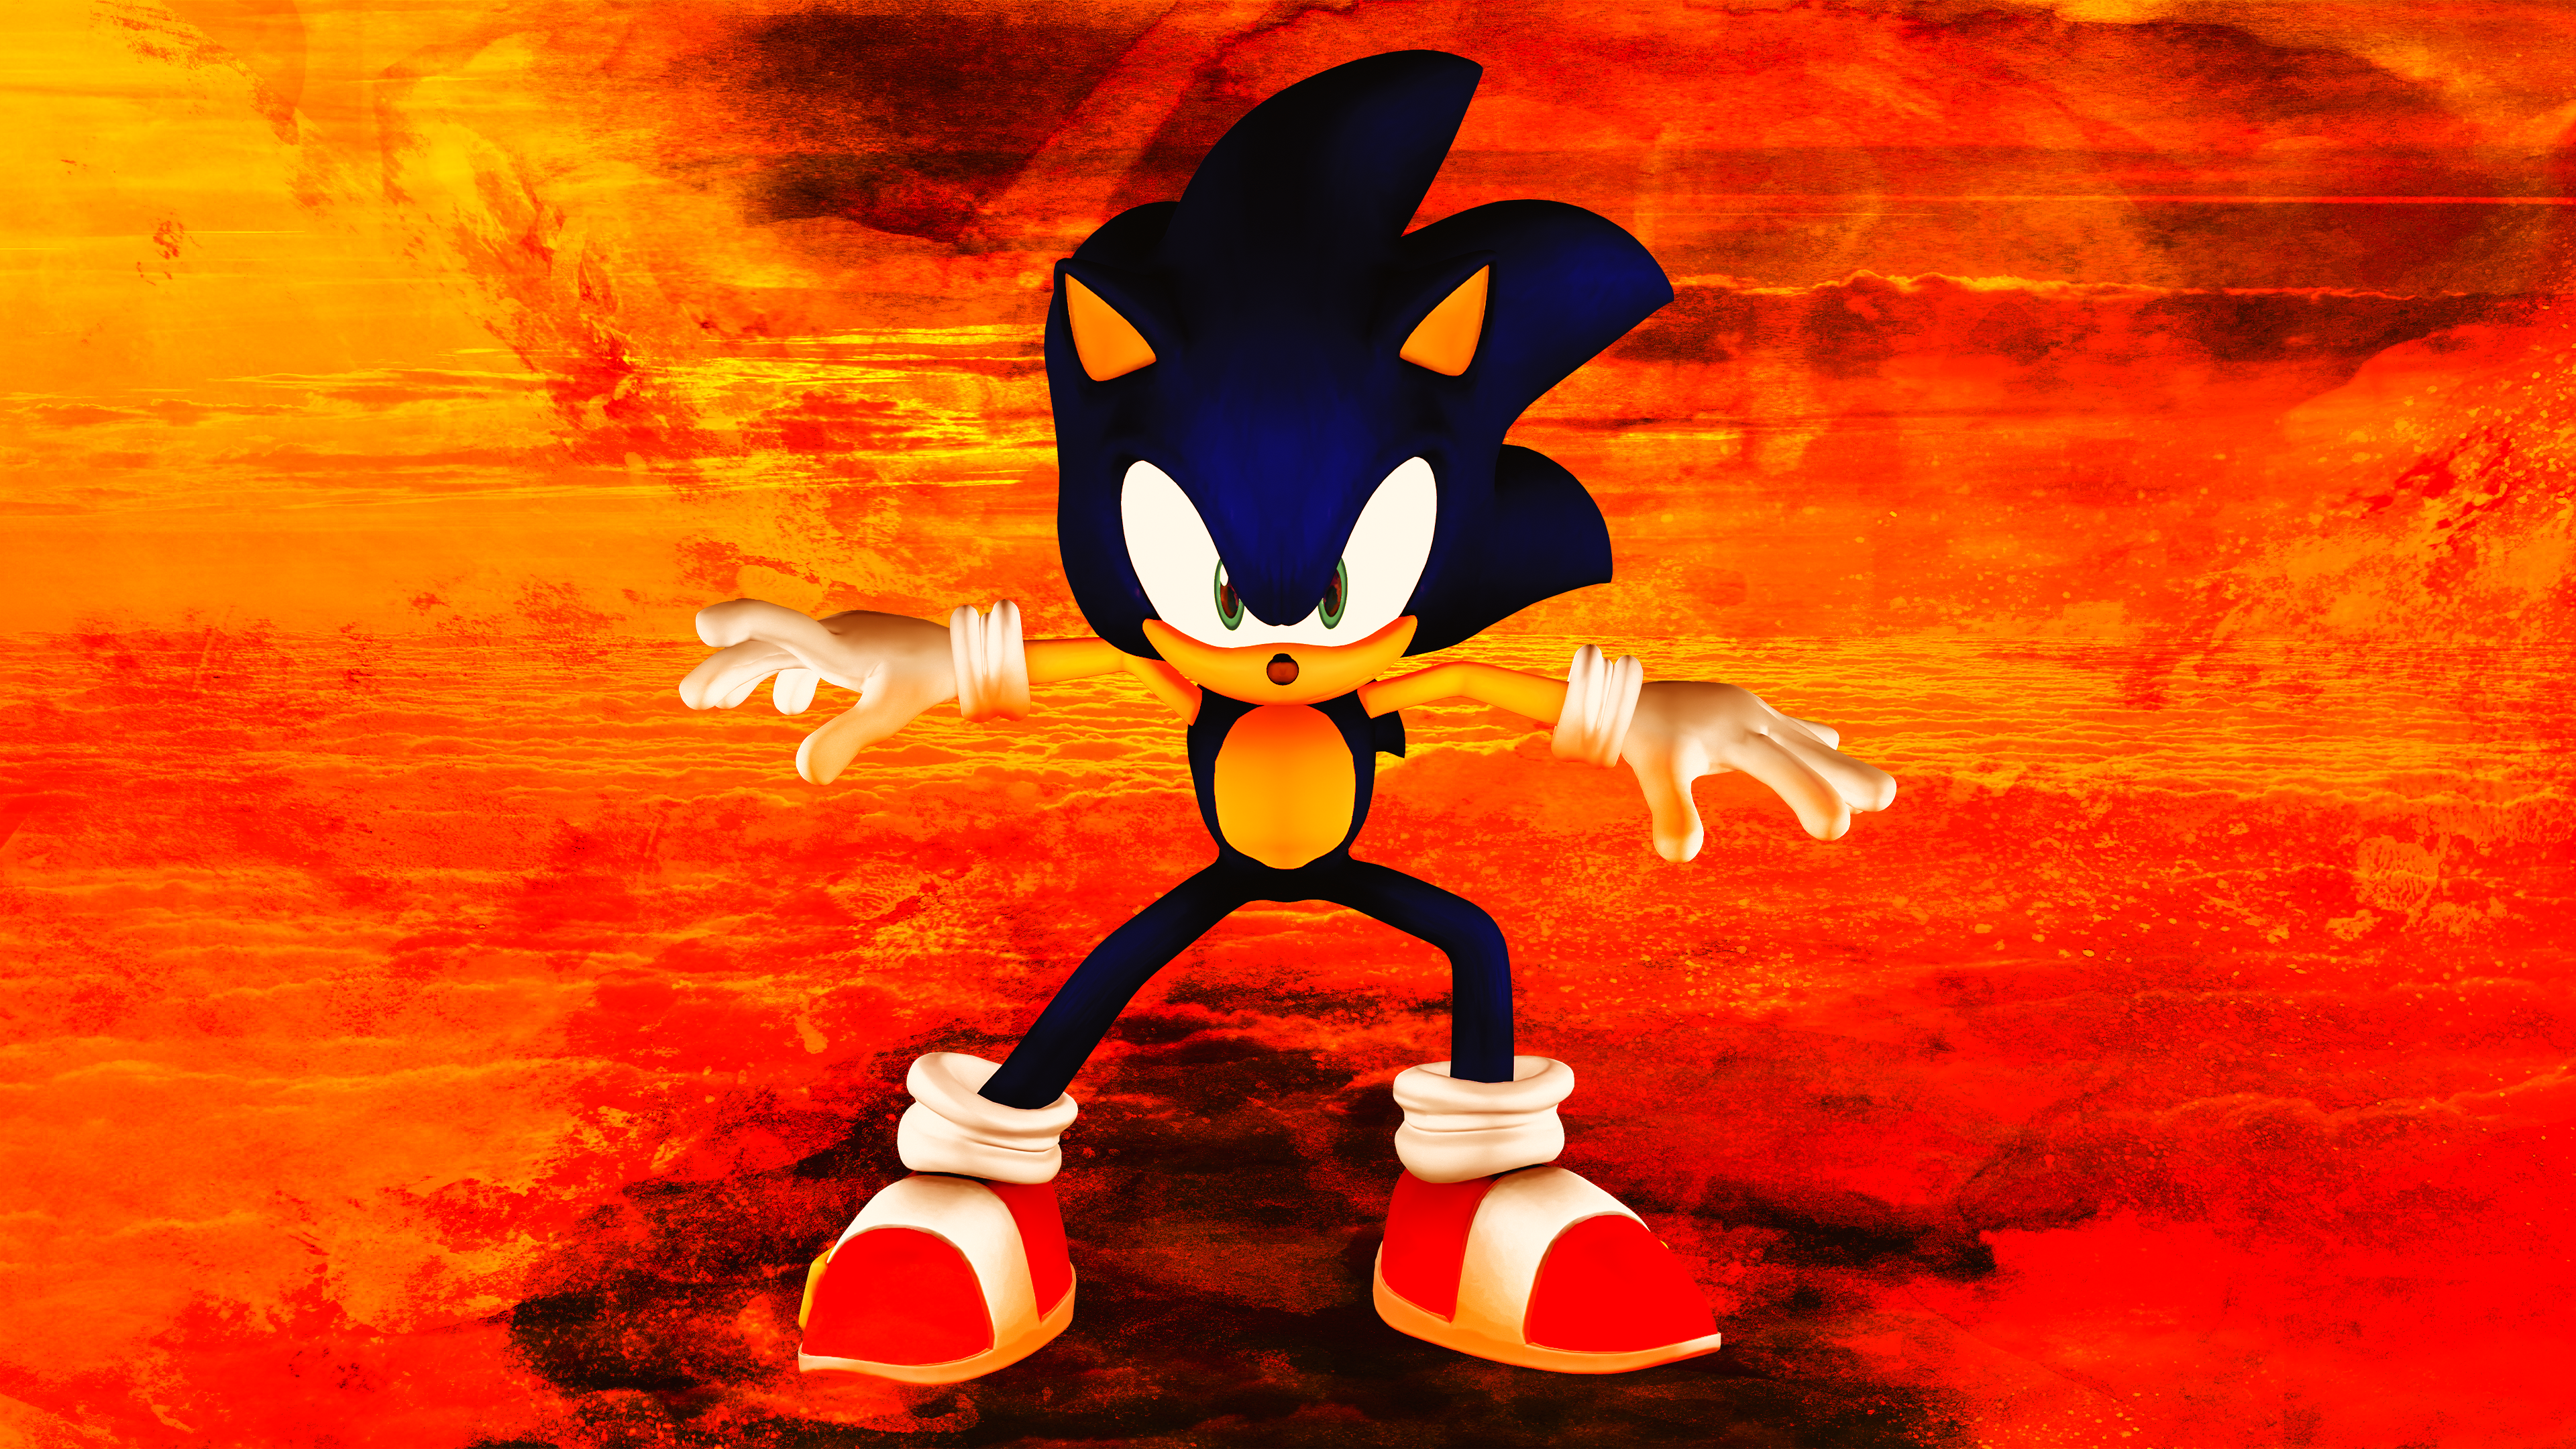 Dark Sonic | Poster